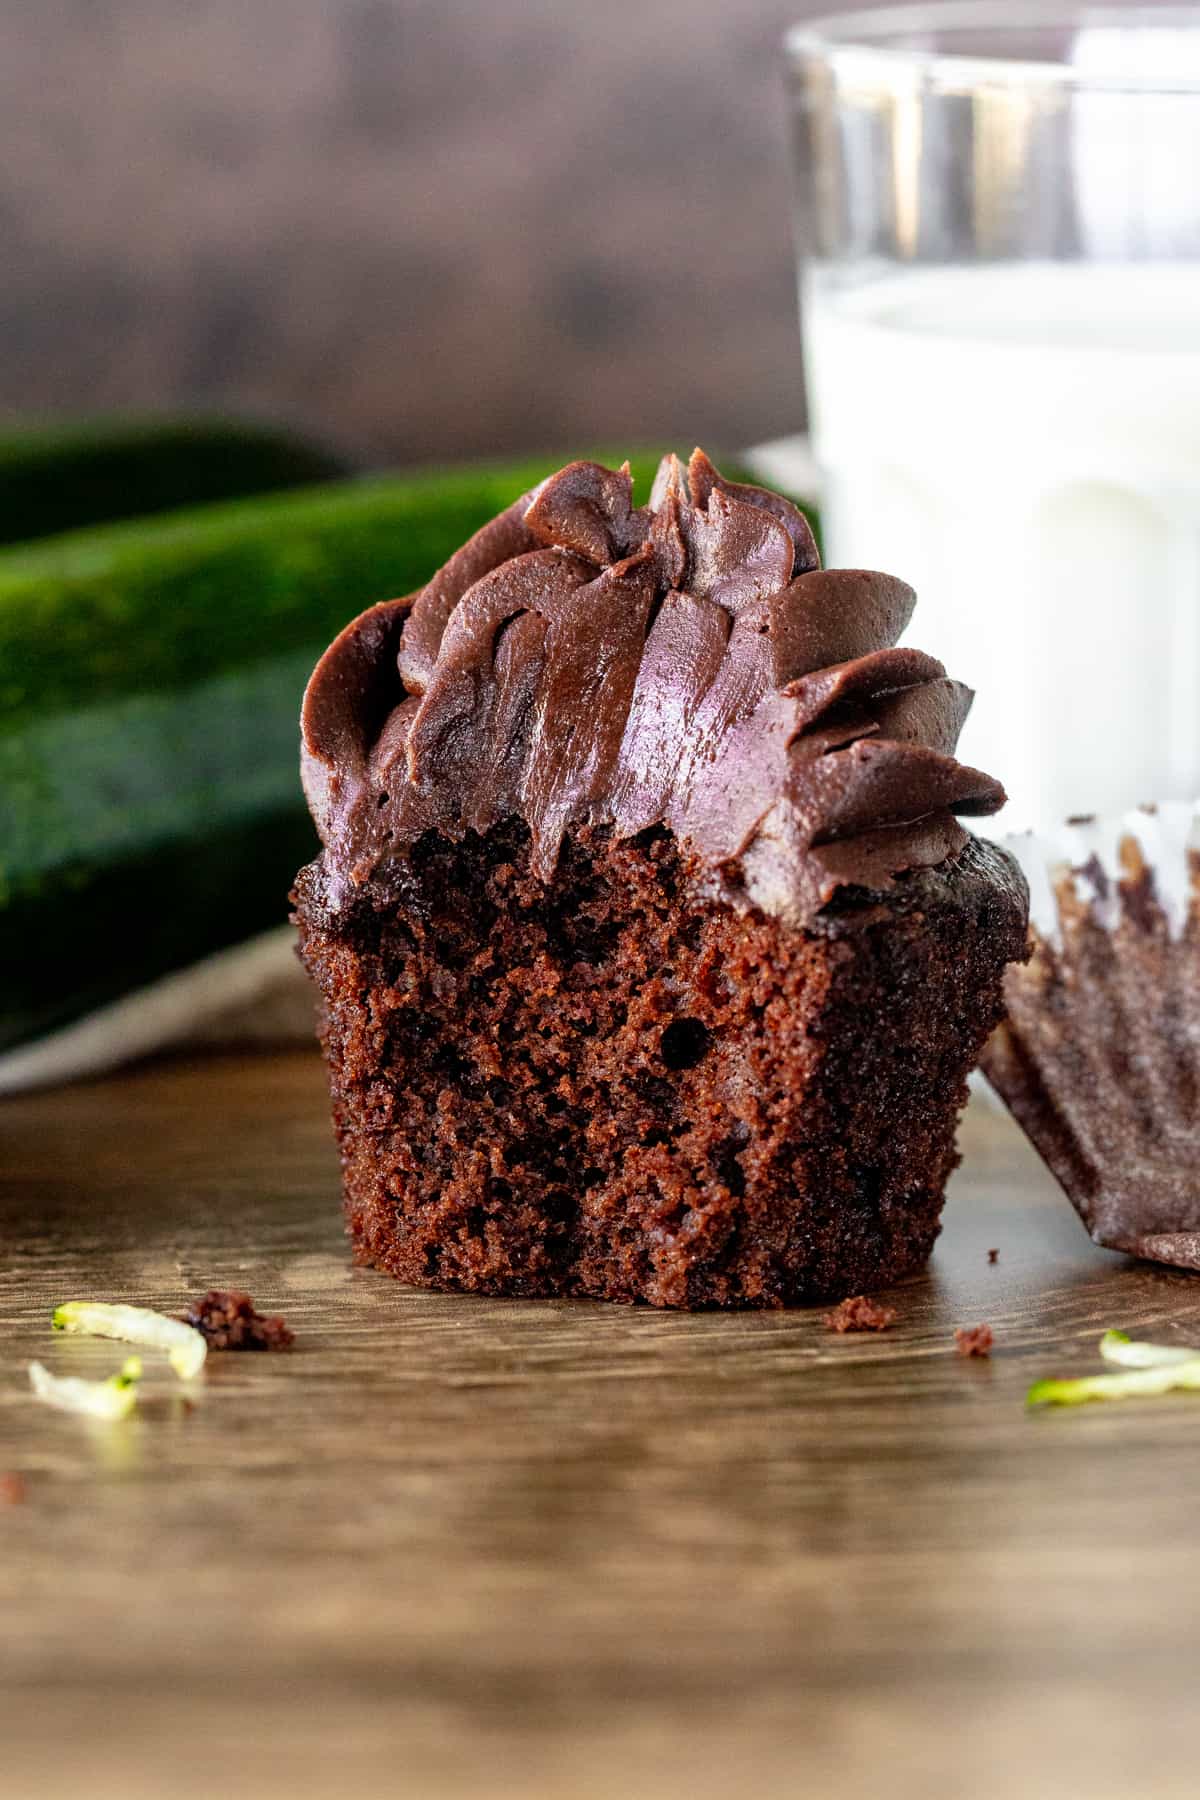 Chocolate zucchini cupcake with chocolate frosting